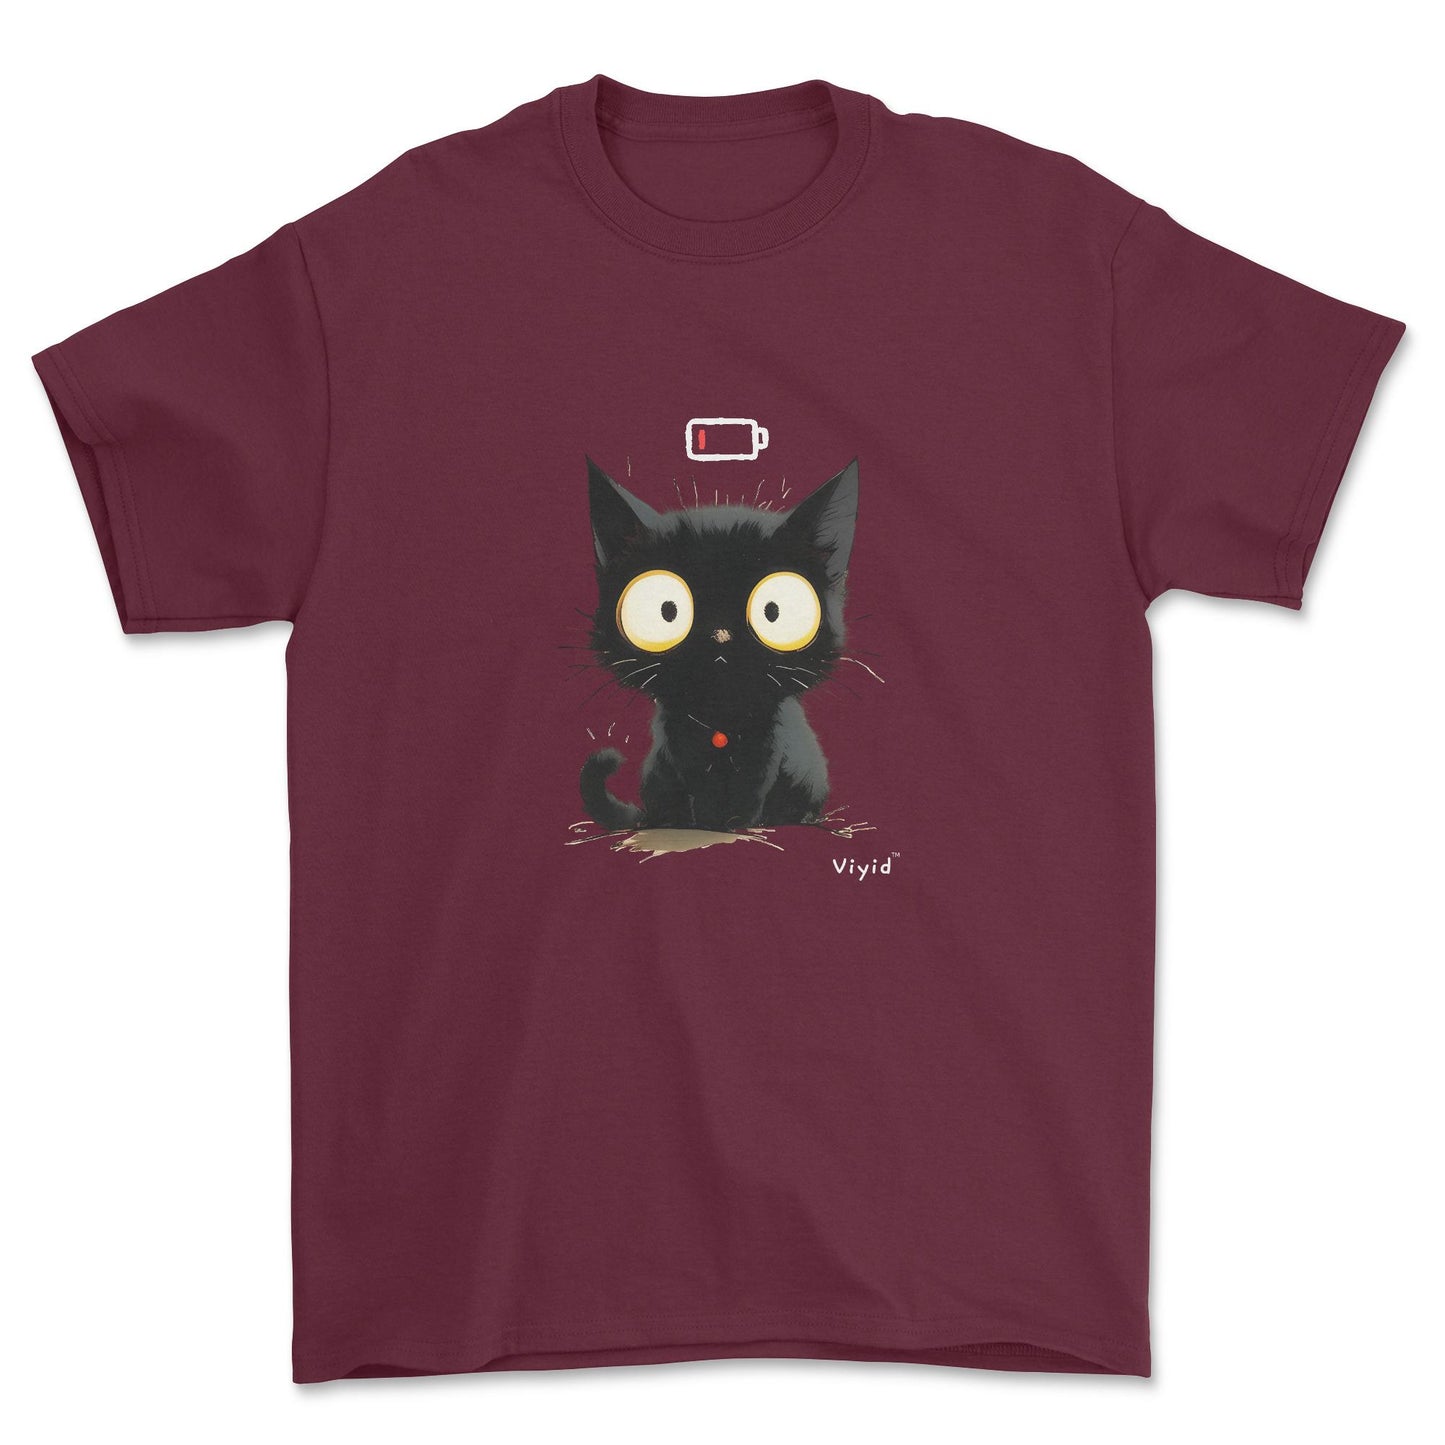 Low battery black cat adult t-shirt maroon